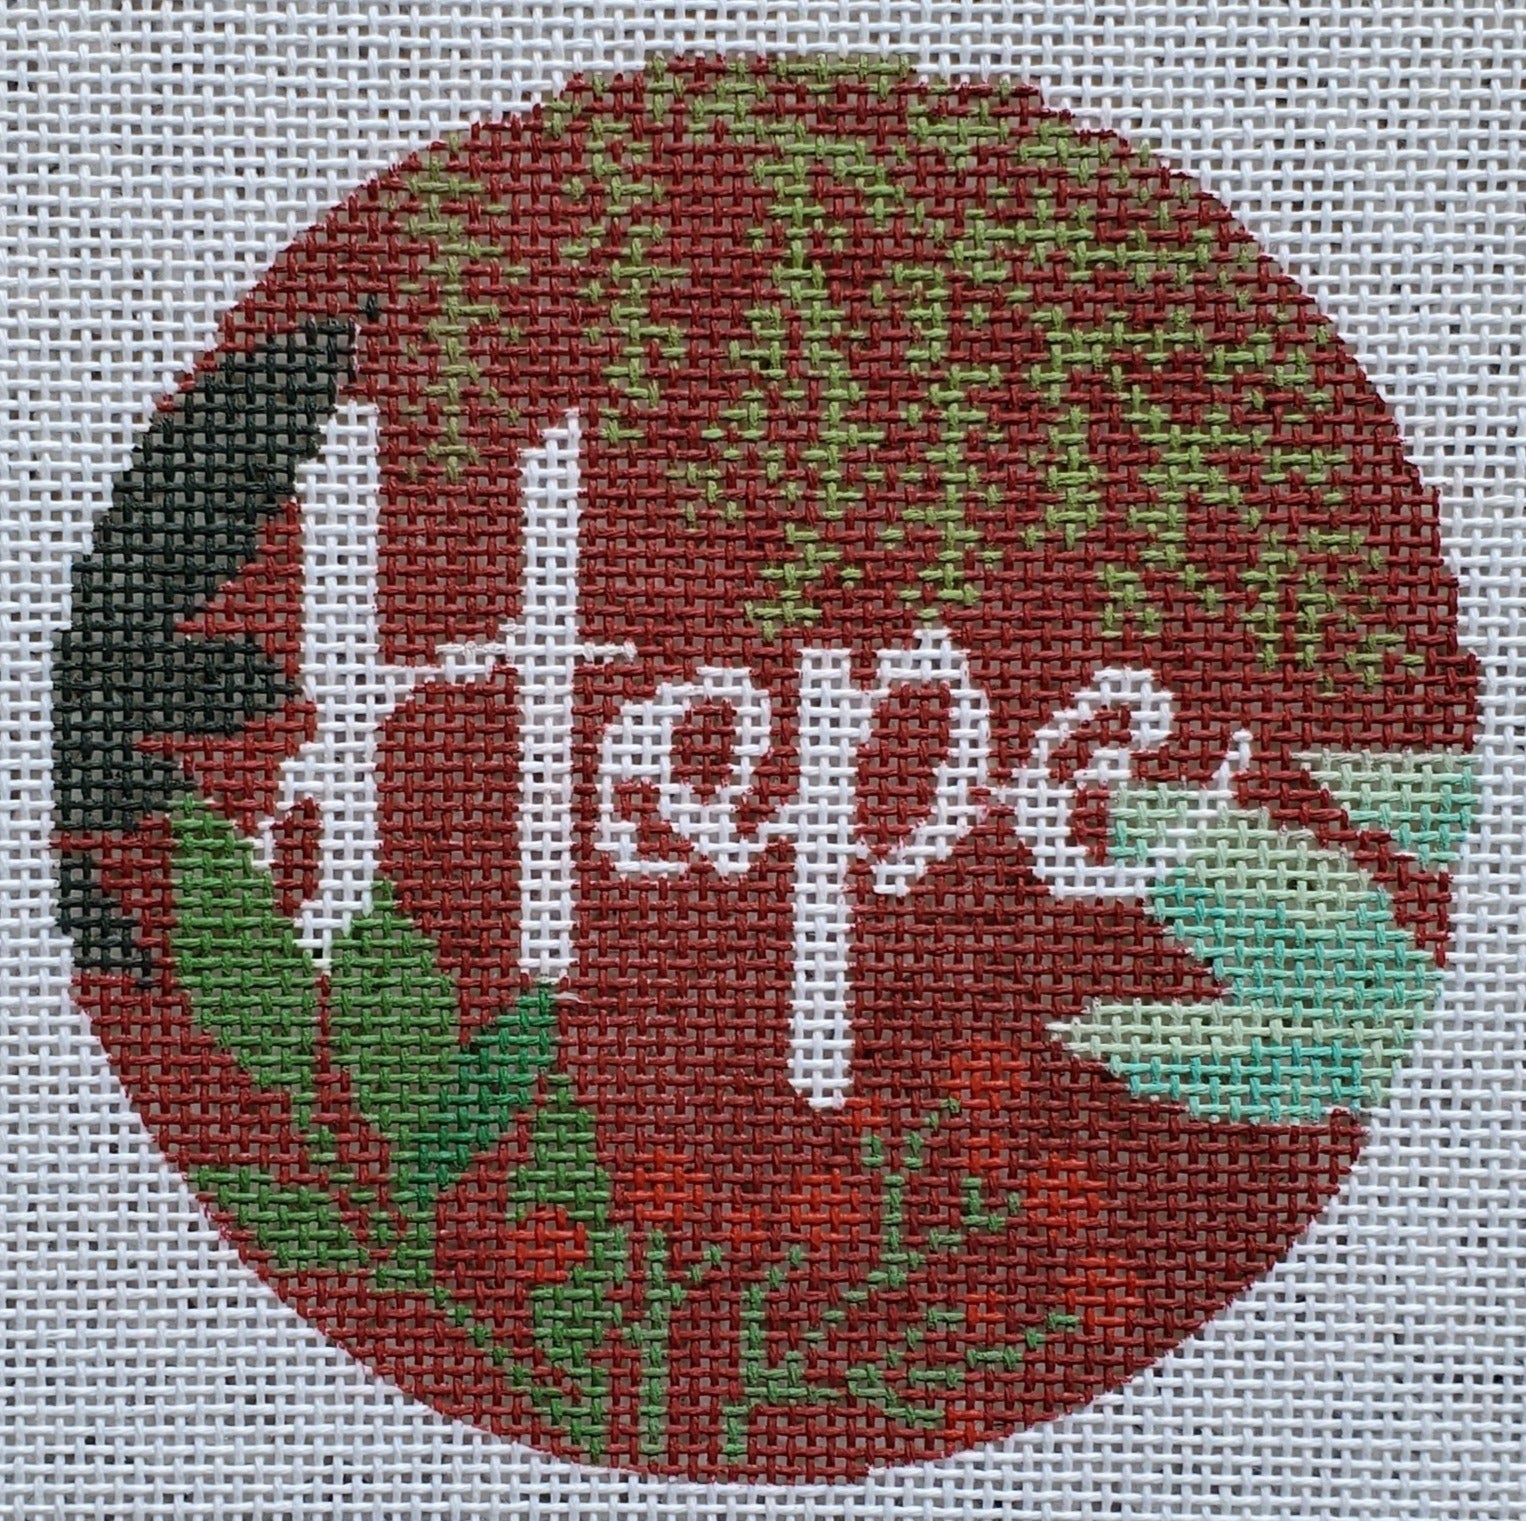 Botanical Hope-red LL-ORN-07